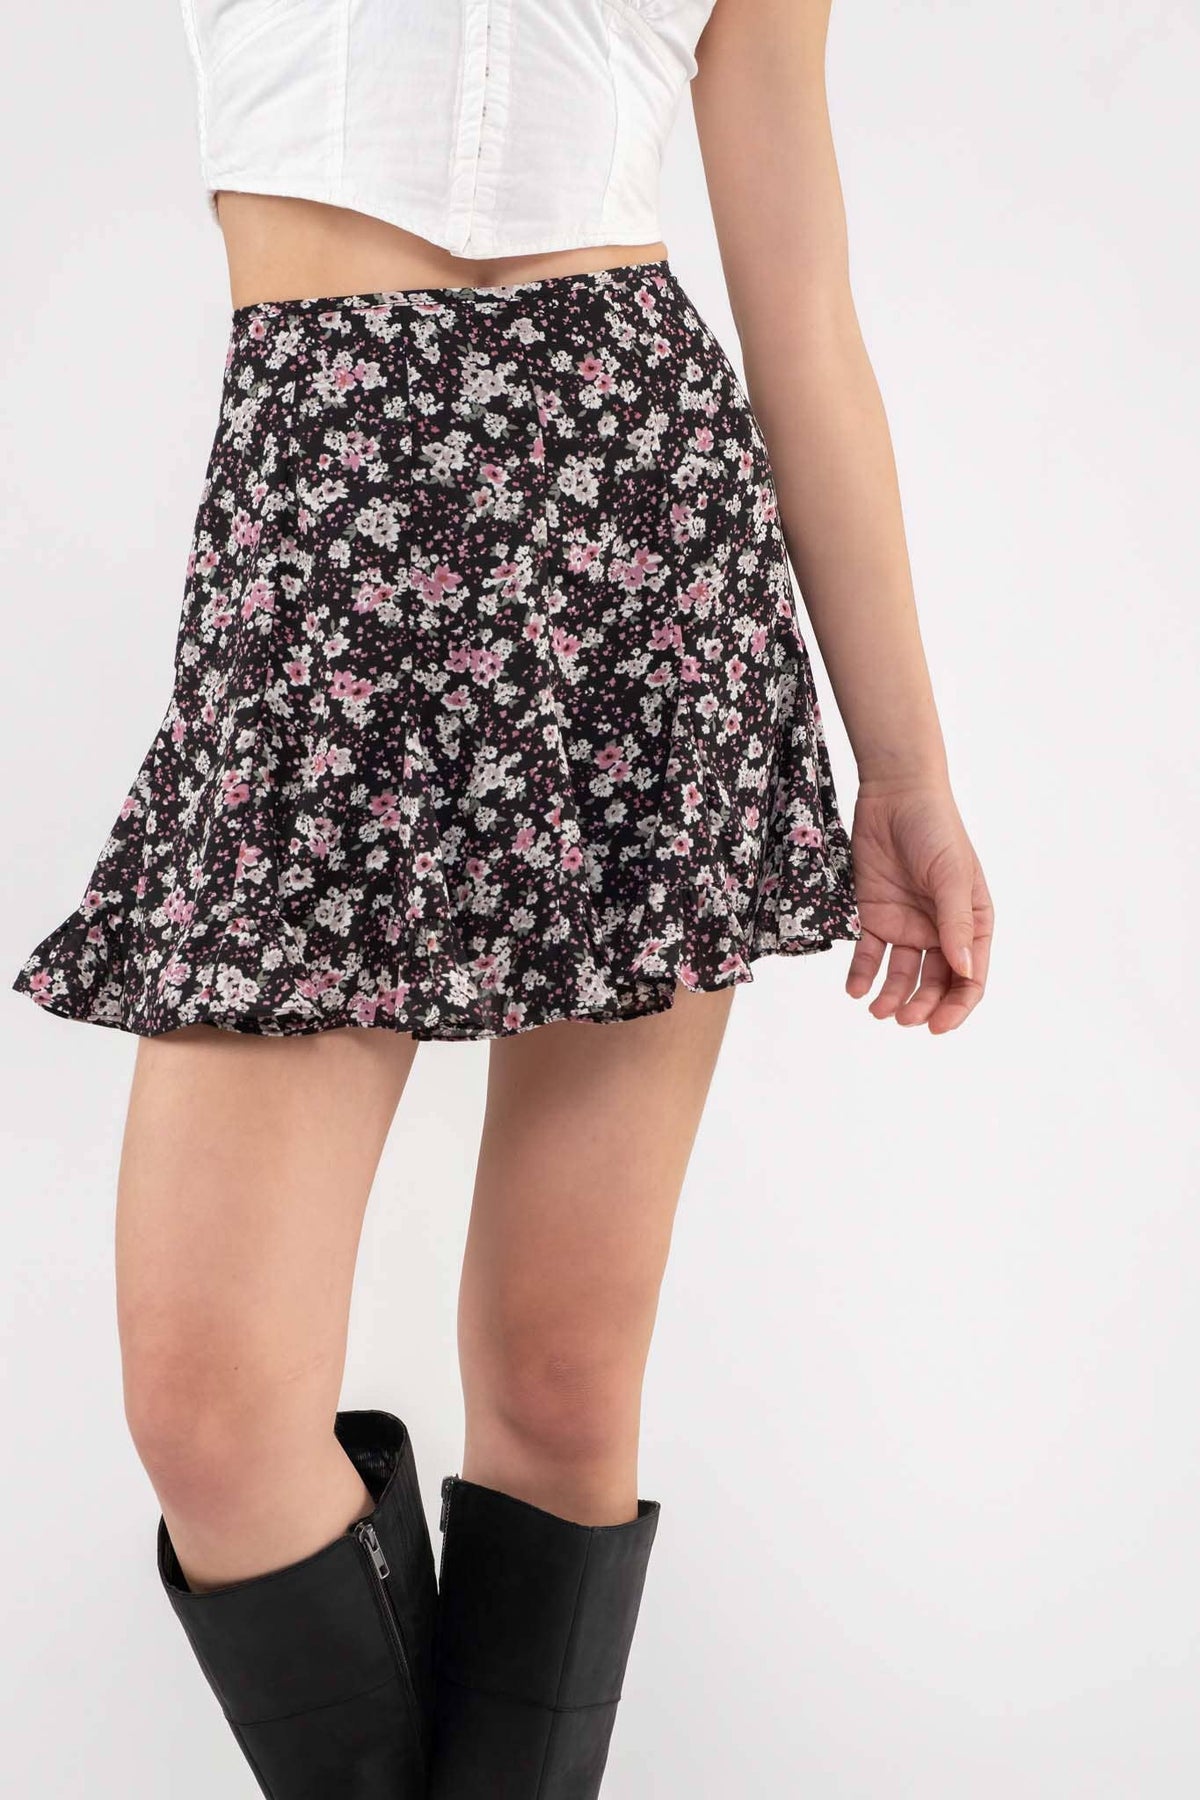 The Farah floral skirt